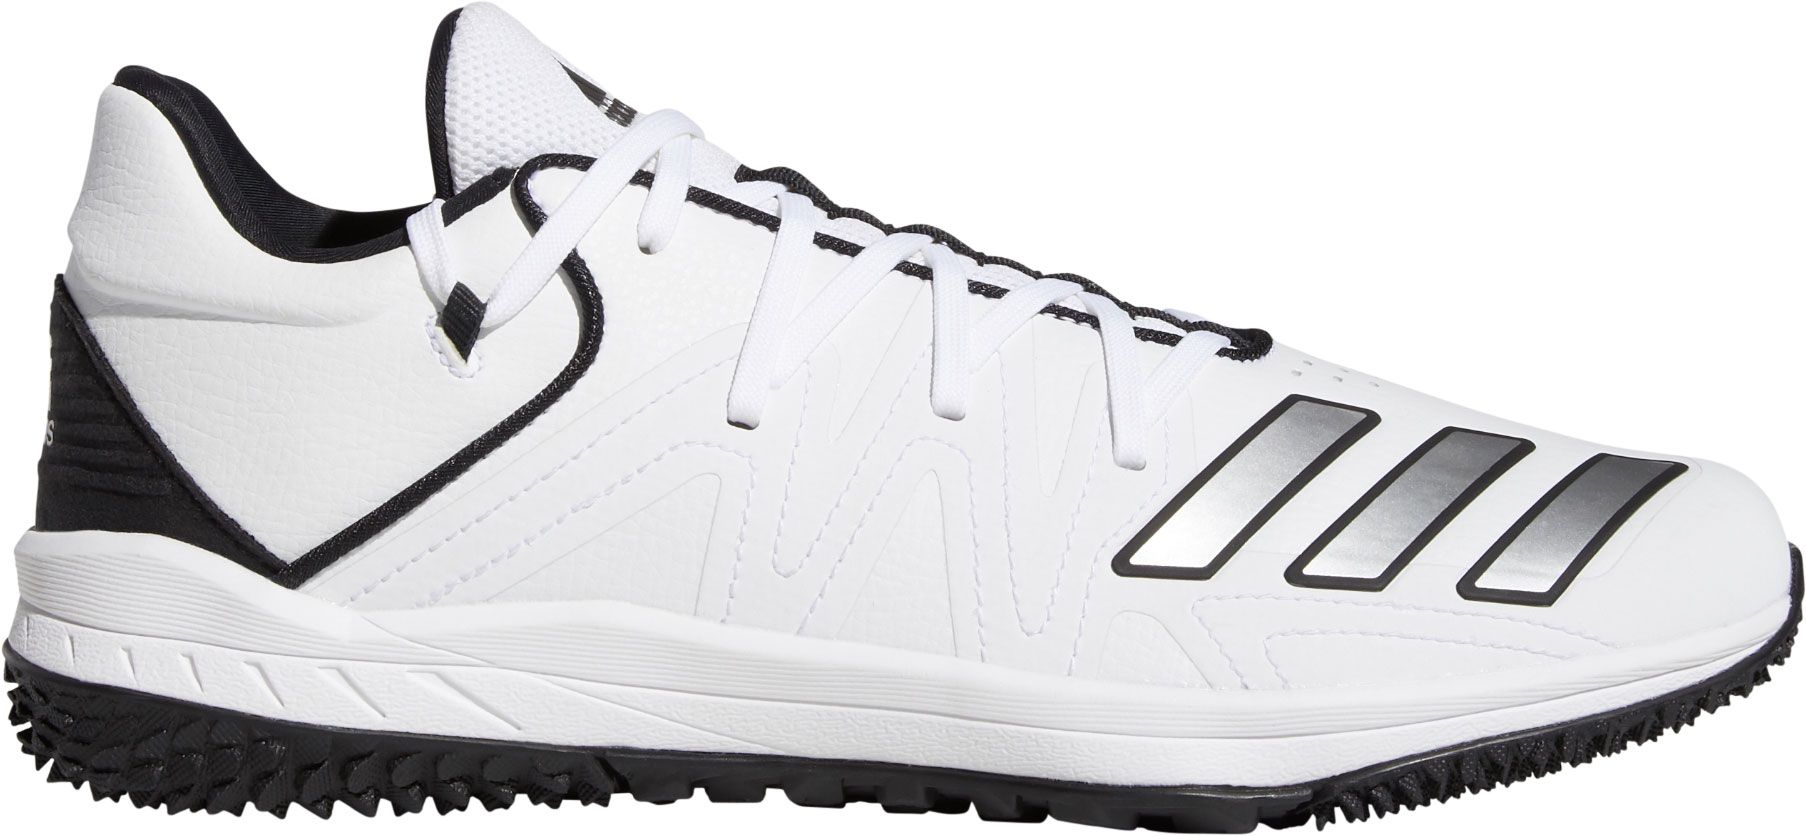 adidas speed turf baseball shoes